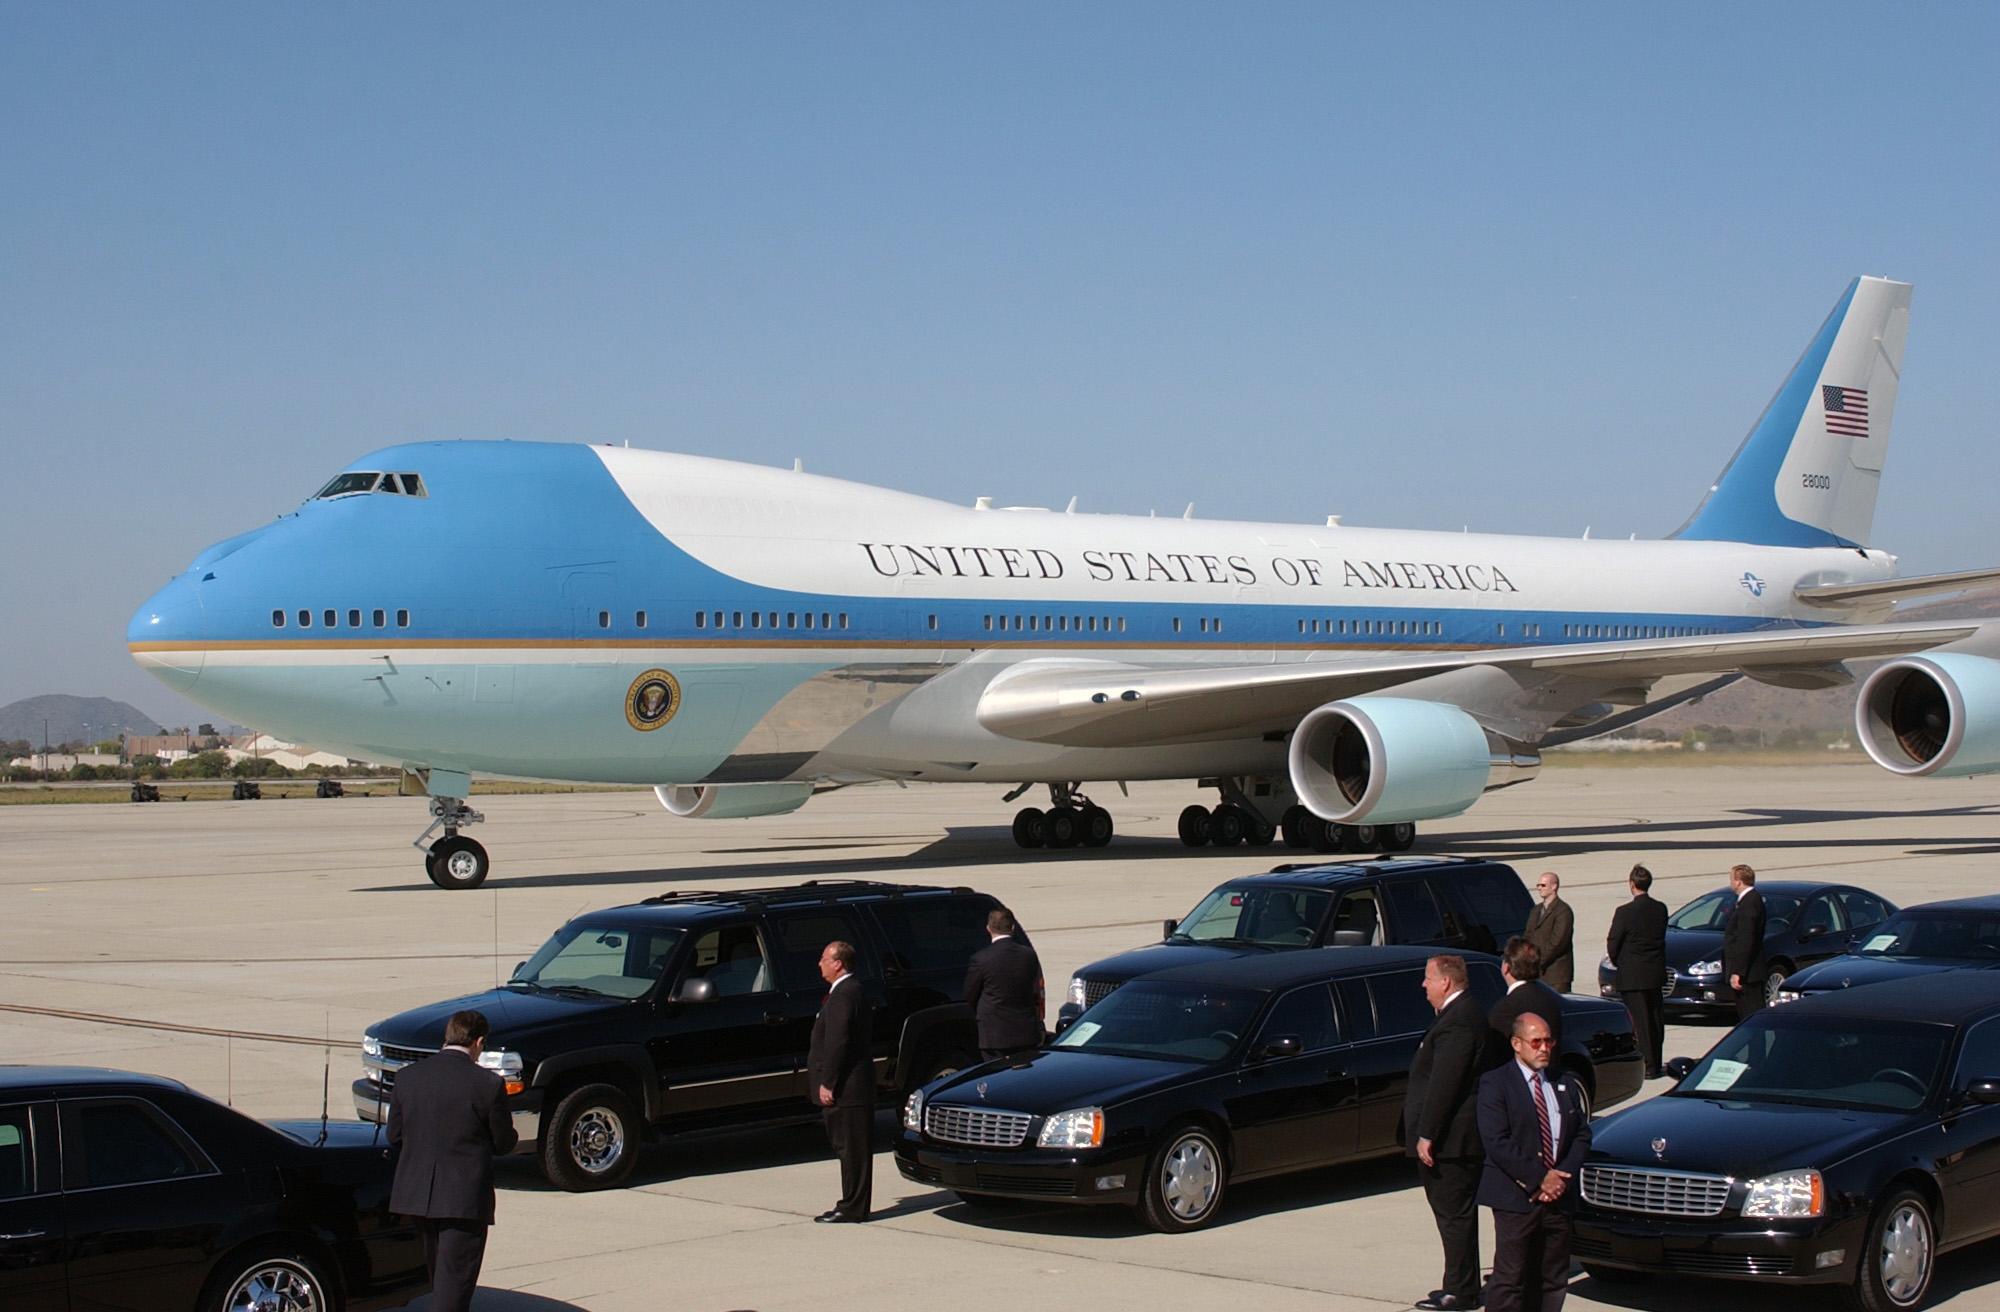 Президентский самолет. Боинг 747 президента США. Борт 1 президента США. Самолет Боинг 747 президента США. Борт номер 1 президента США Air Force one.